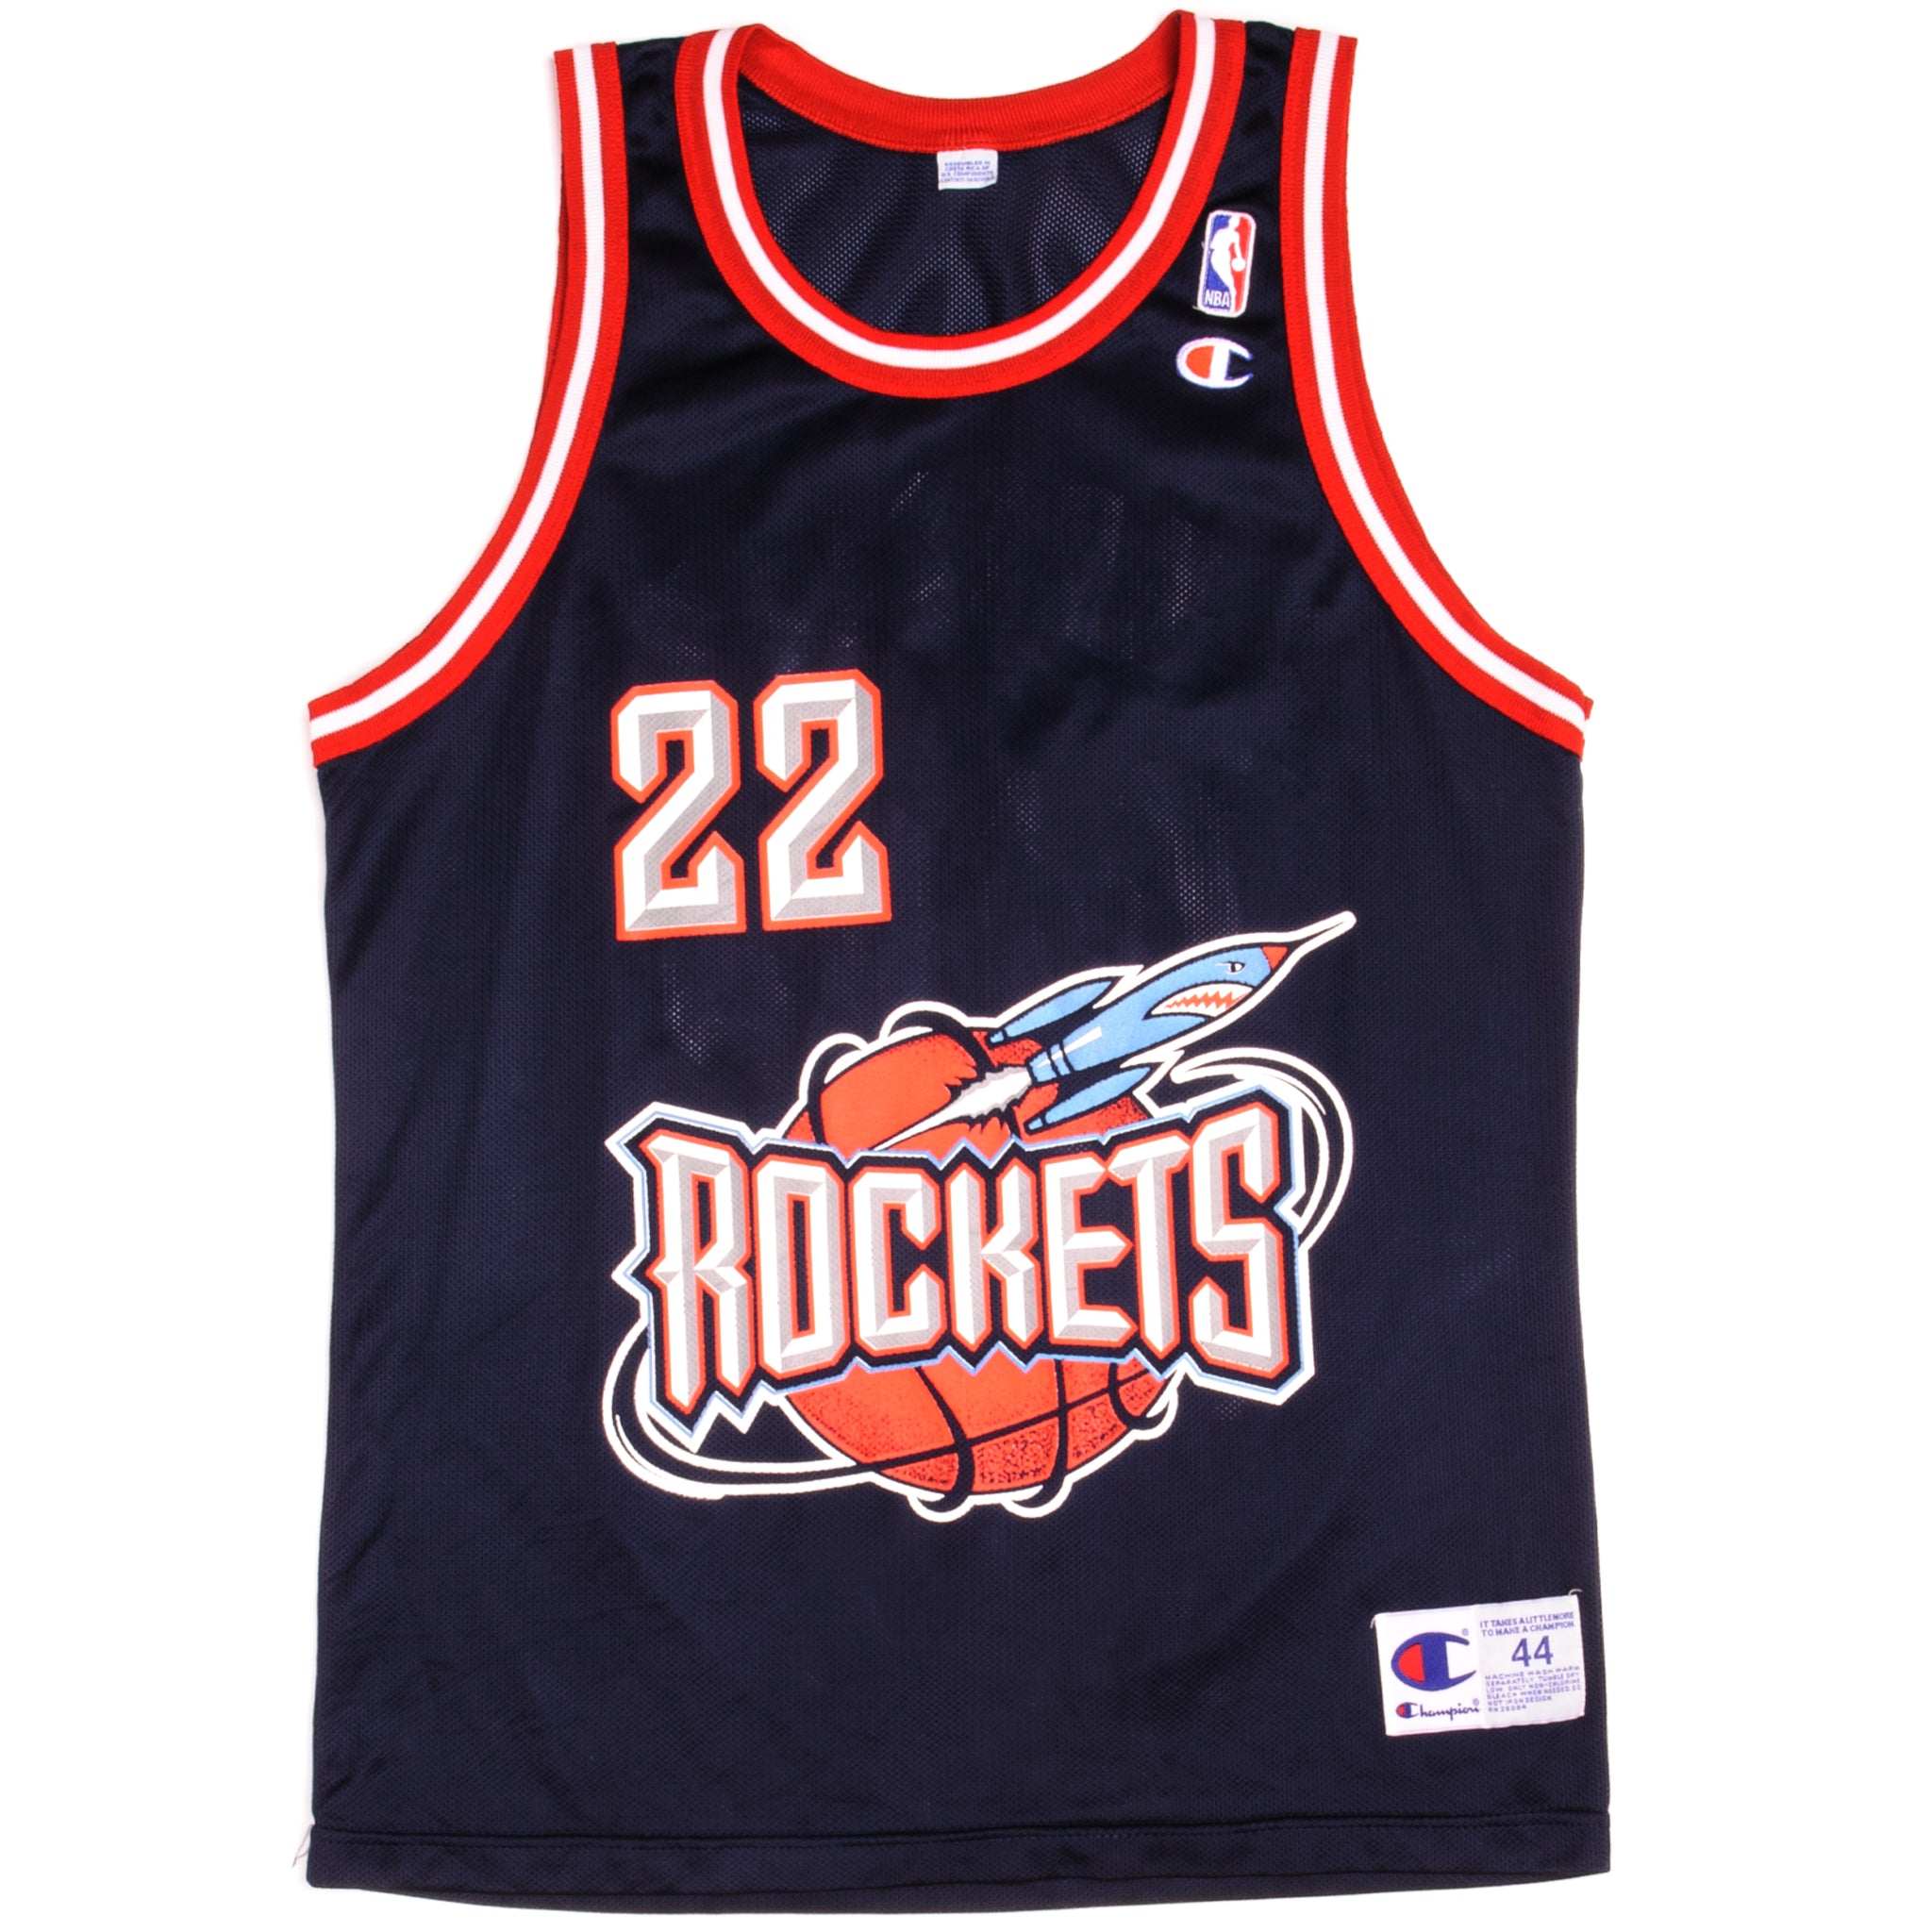  NBA - Rockets retire Drexler's number